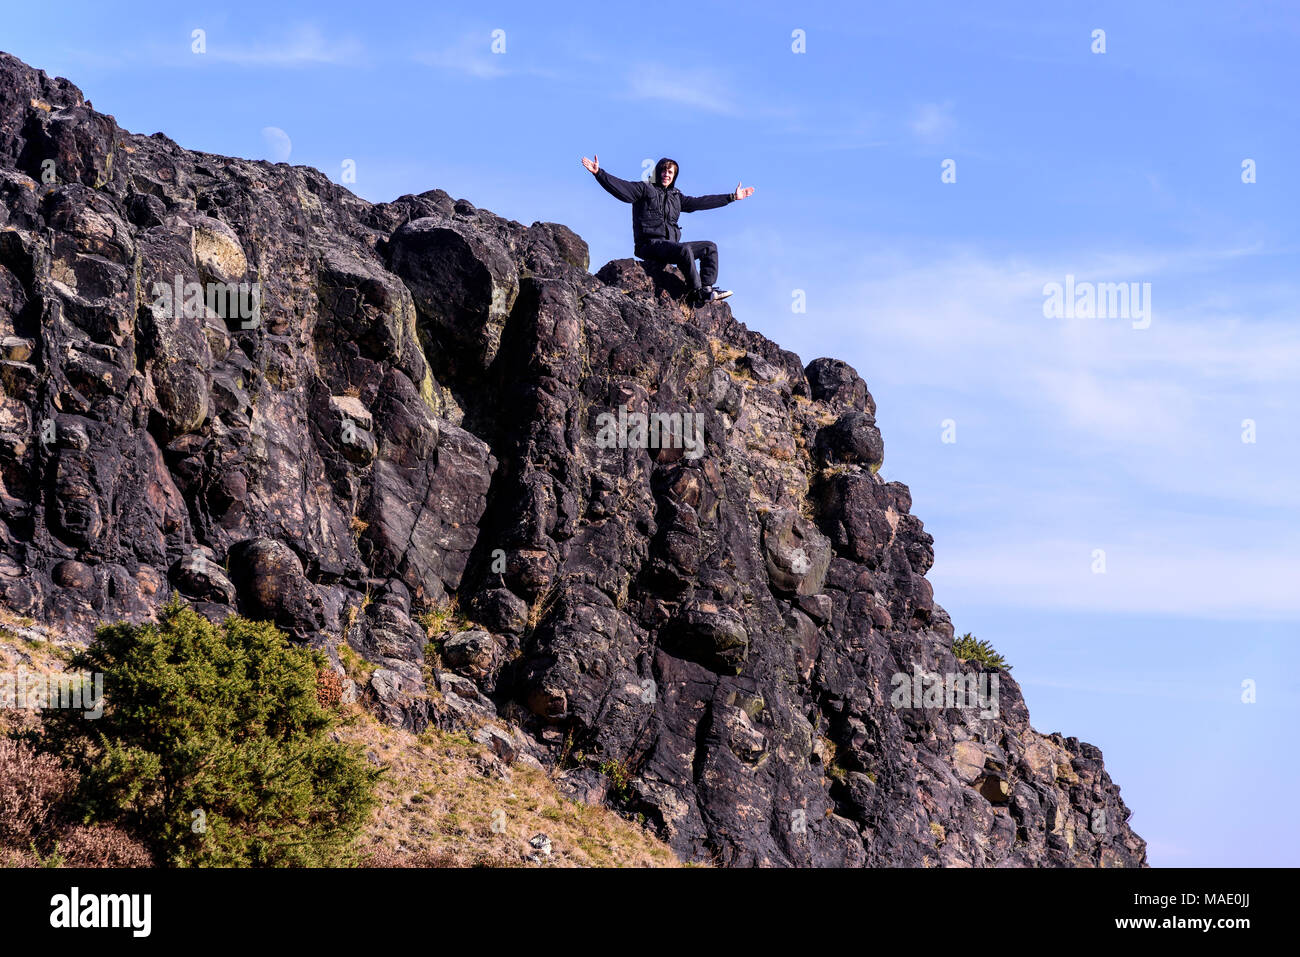 Youth celebrates climbing hill. Stock Photo